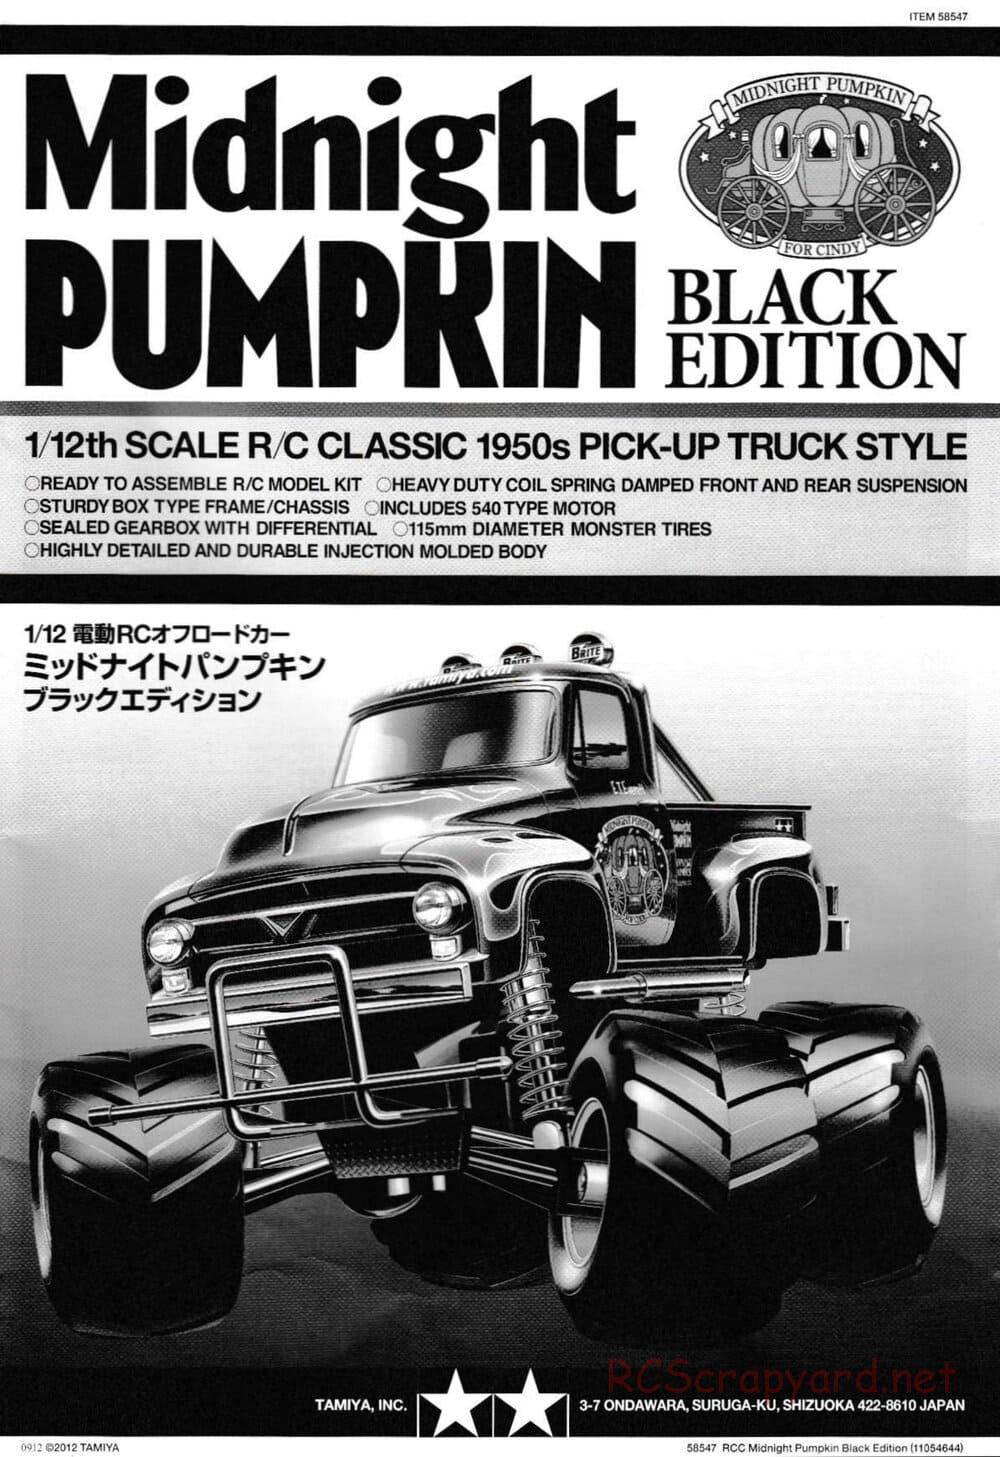 Tamiya - Midnight Pumpkin - Black Edition - CW-01 Chassis - Manual - Page 1